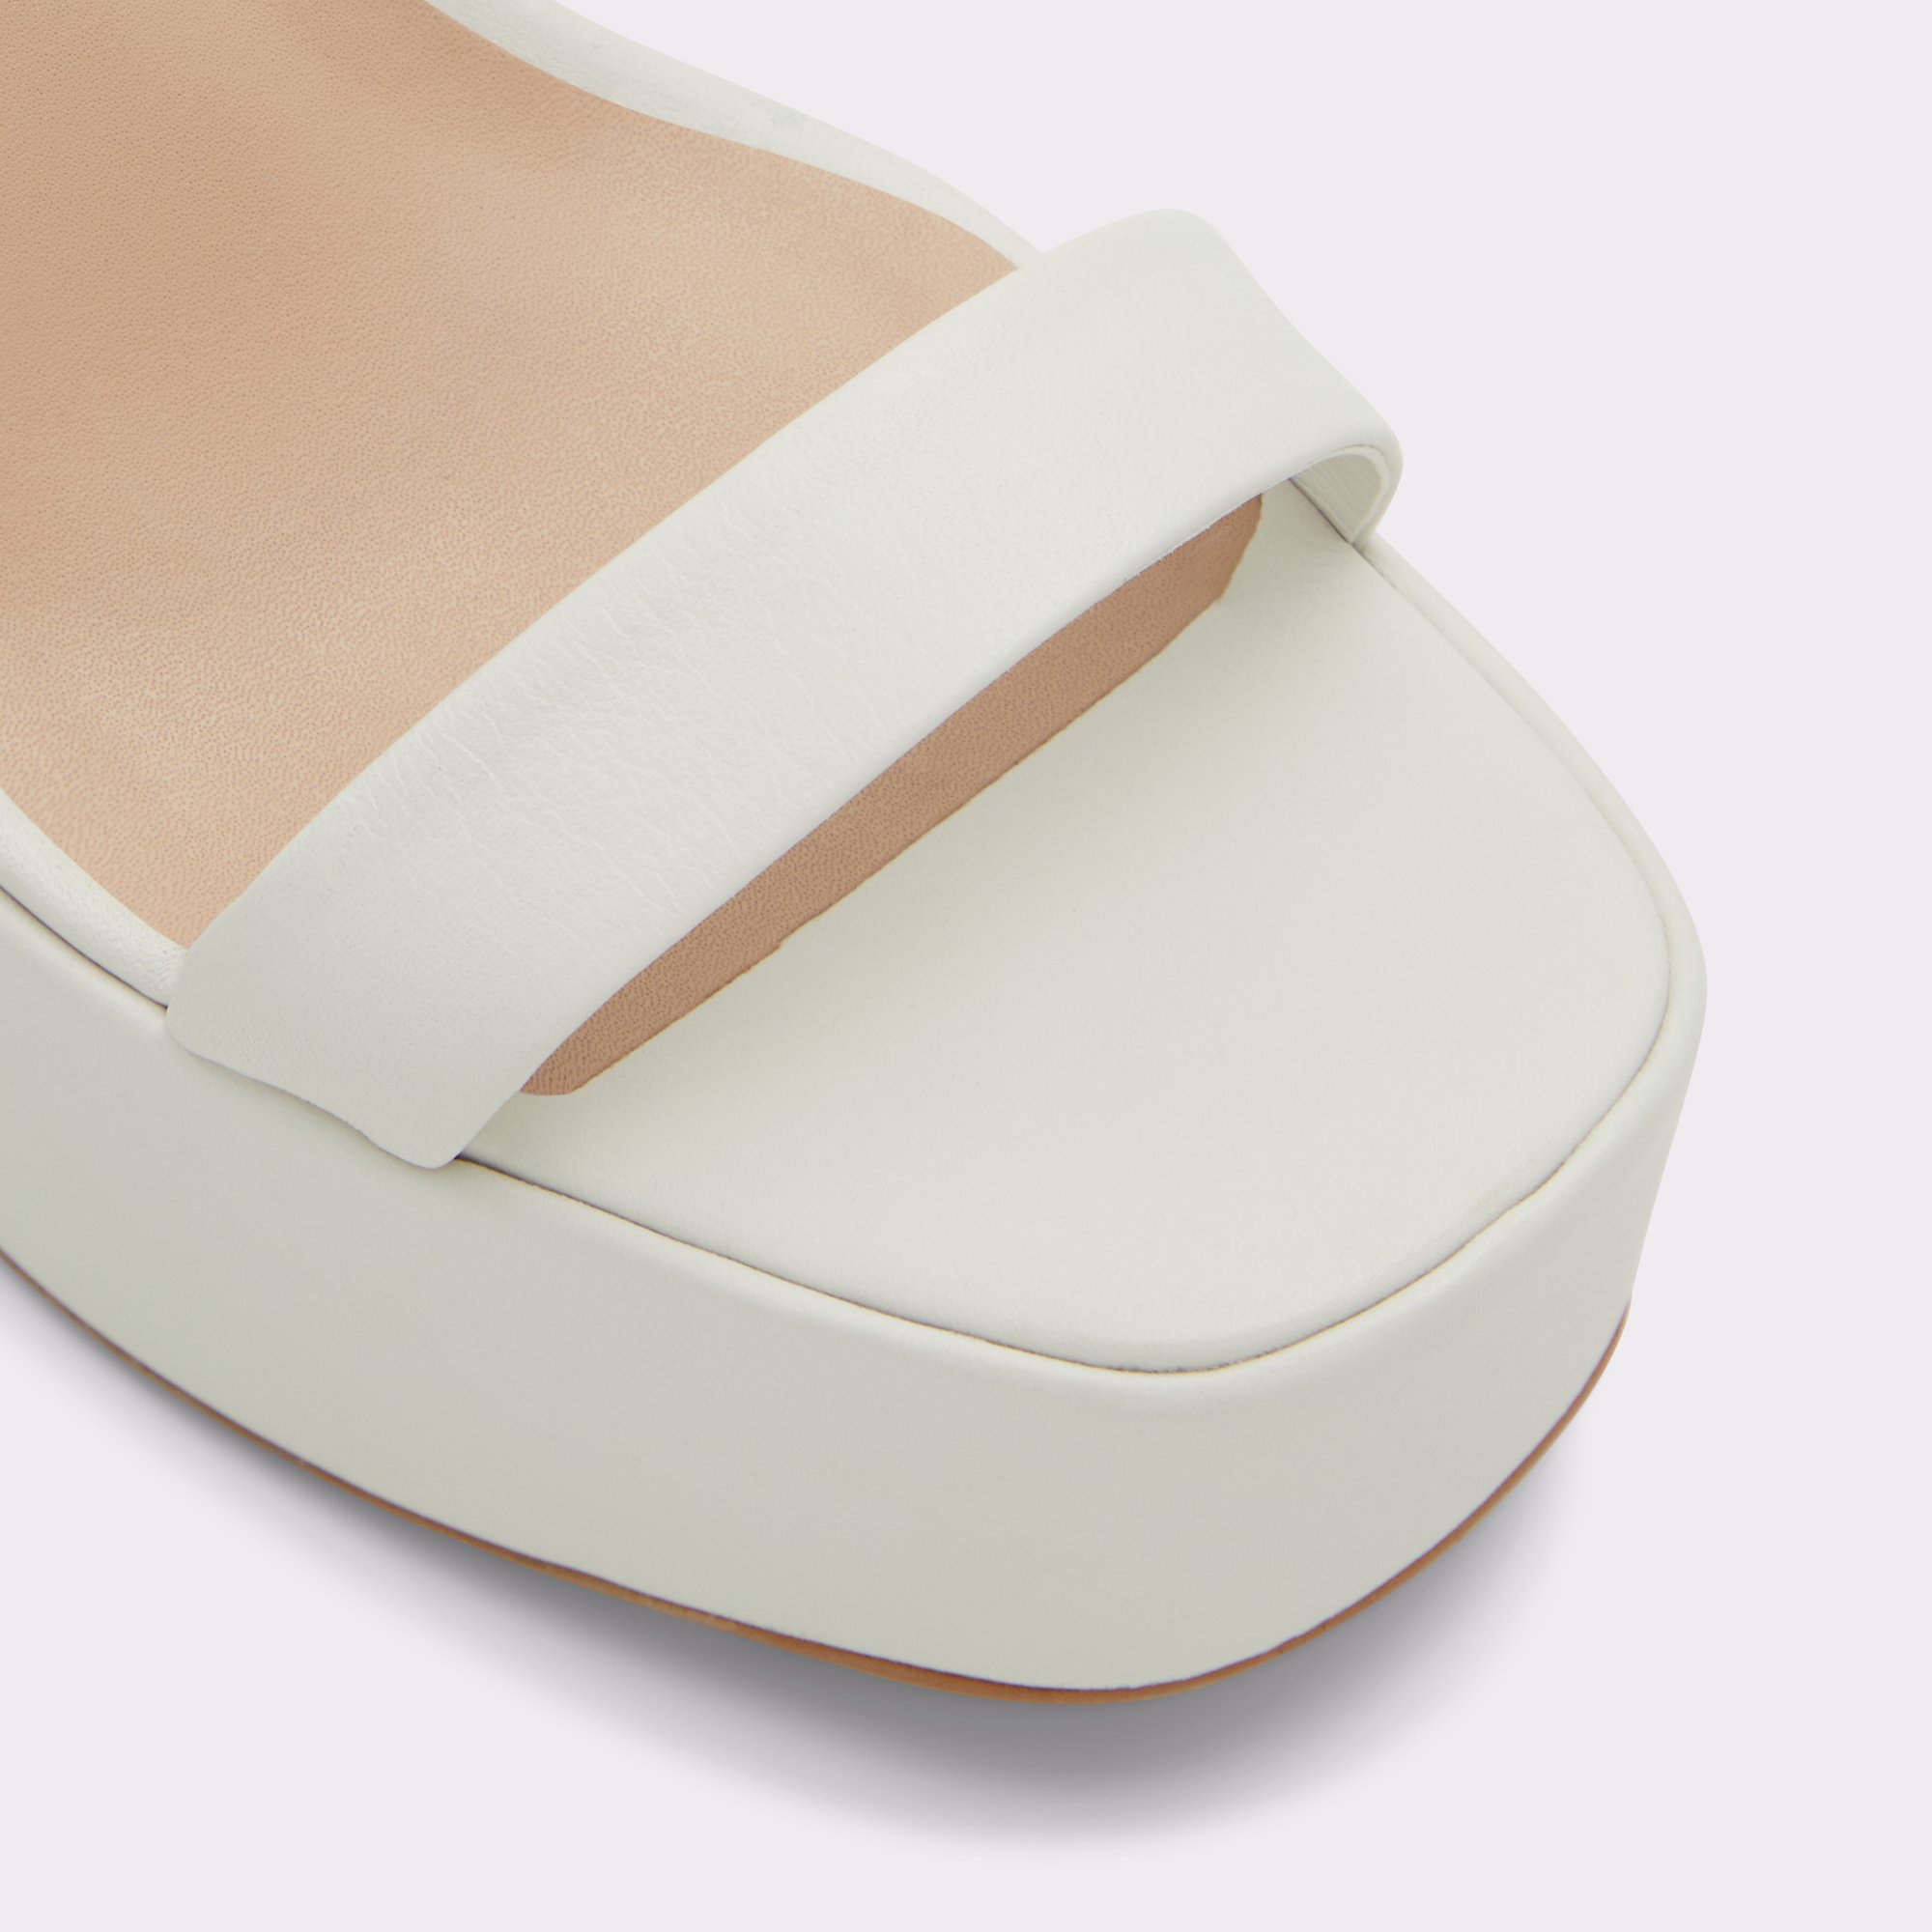 Matylda White/Bone Women's Platform Sandals | ALDO Canada